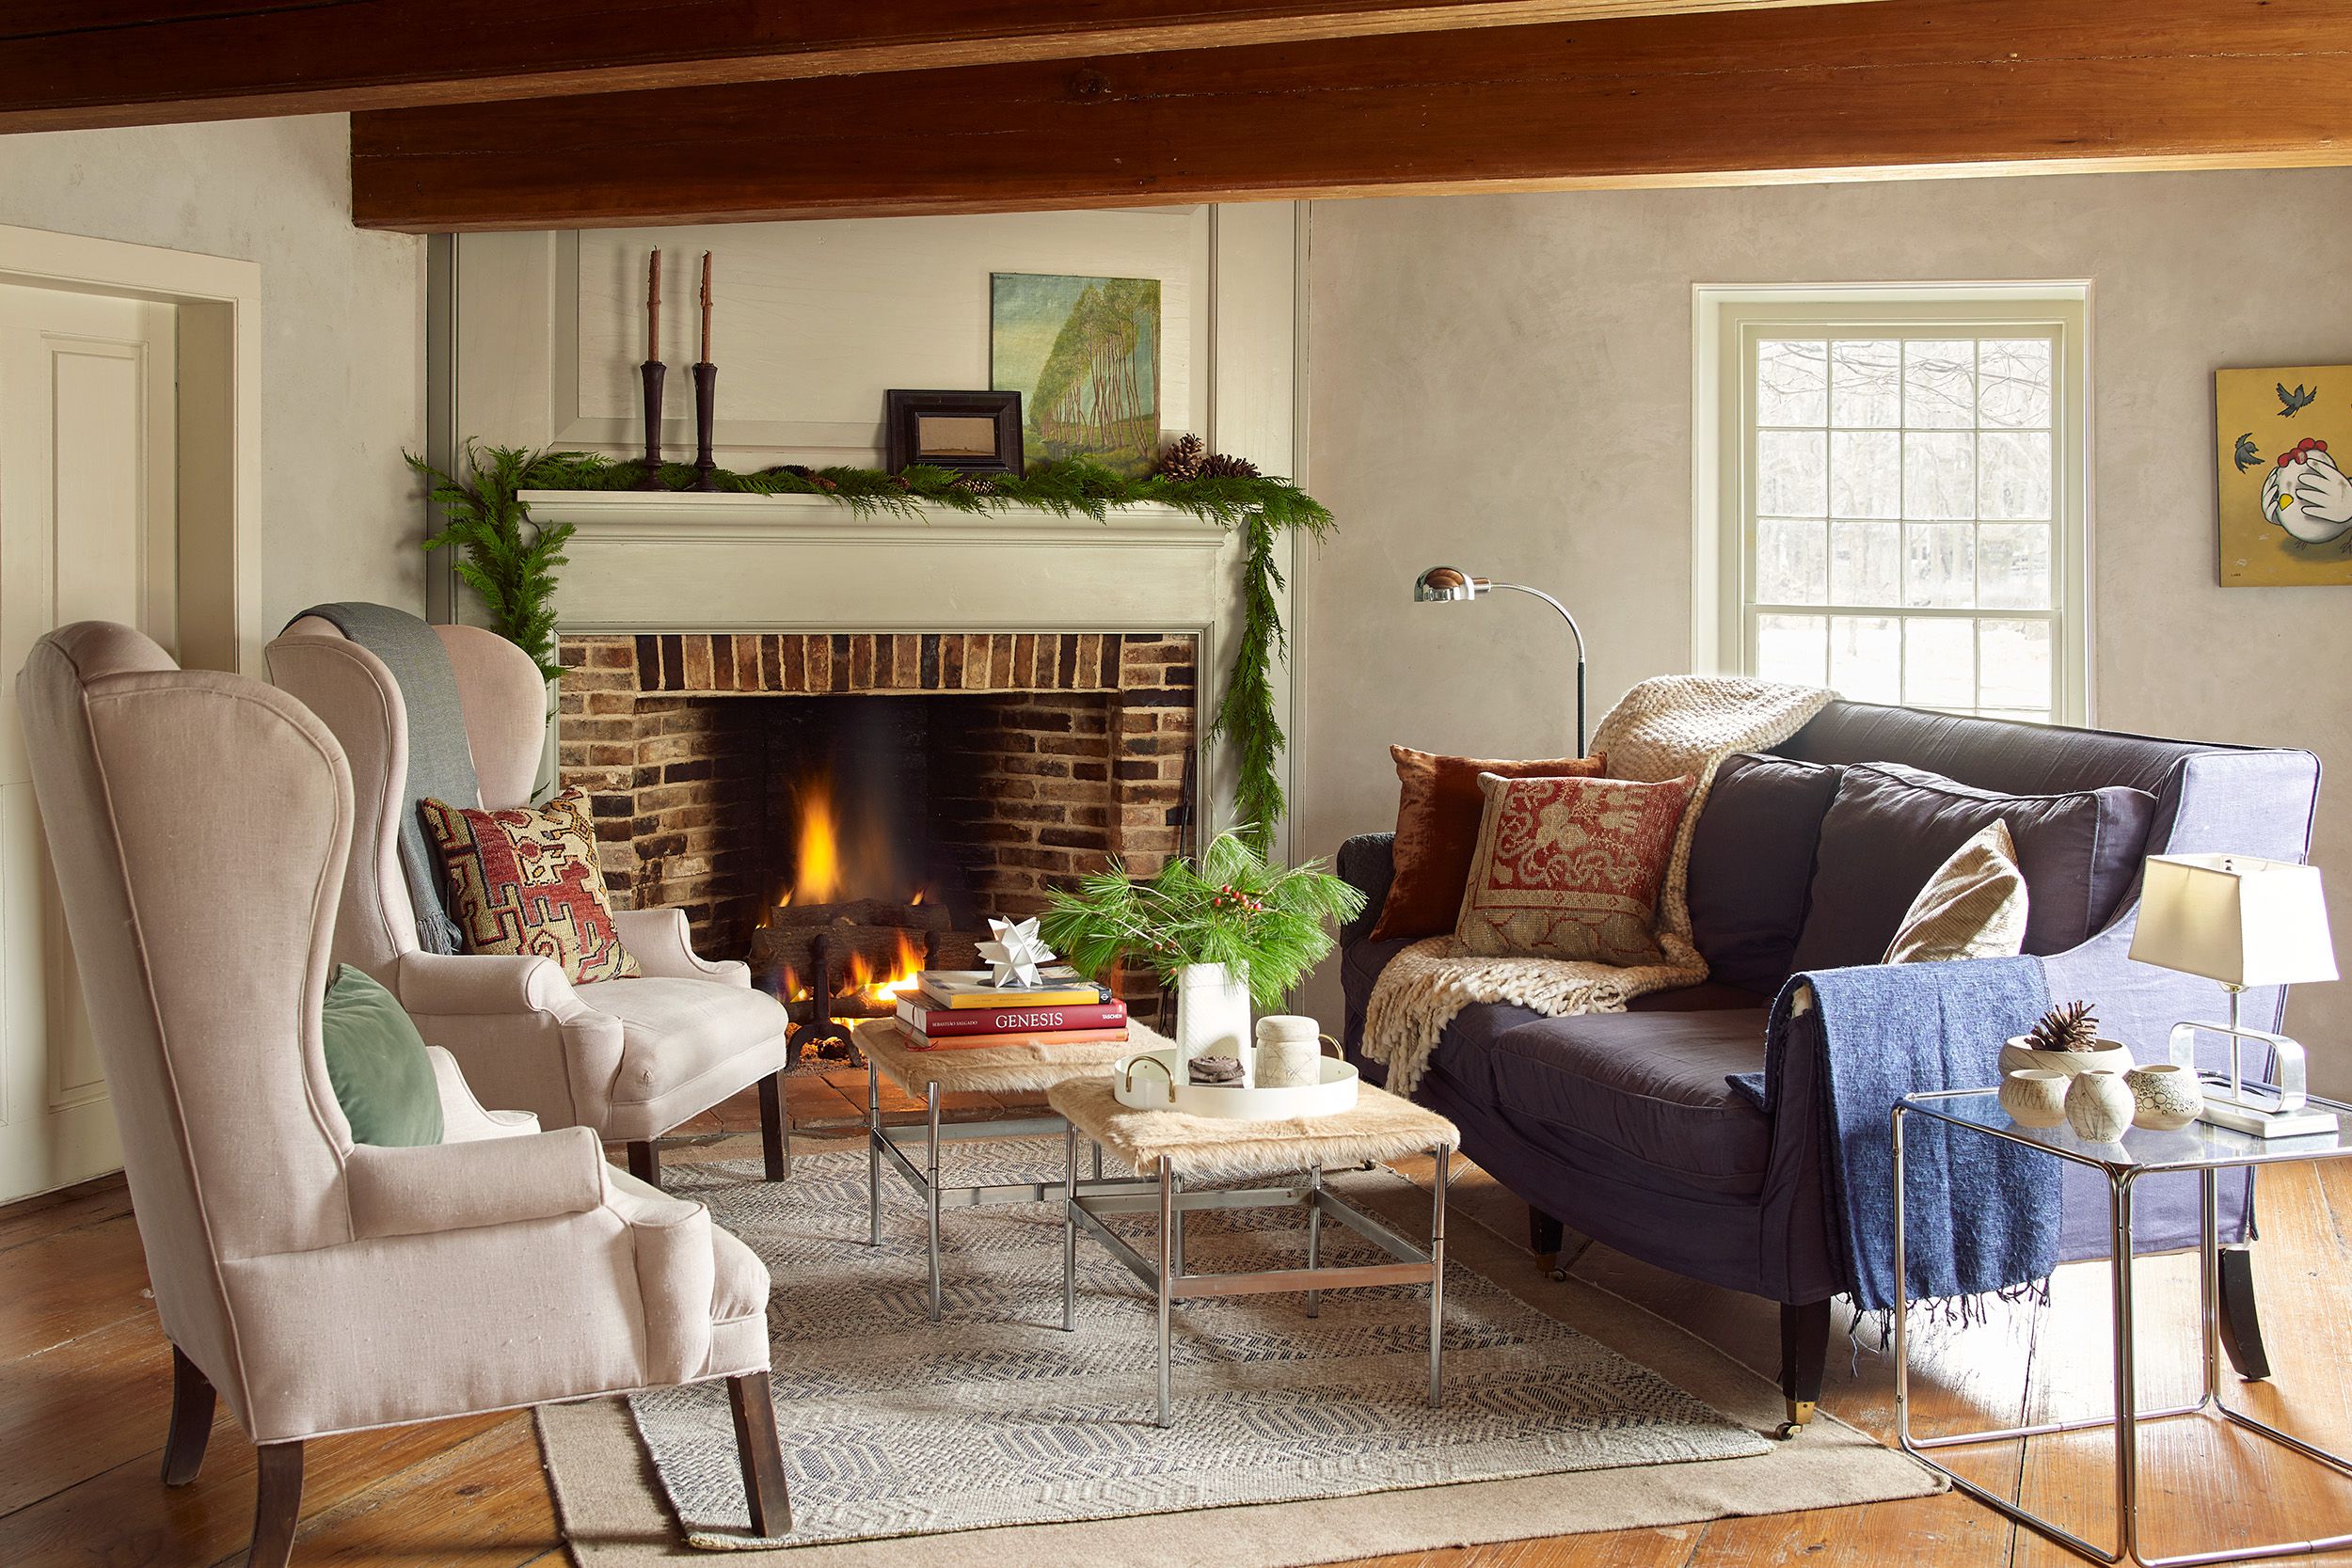 Create a Main Spot with a Basic Corner Fireplace